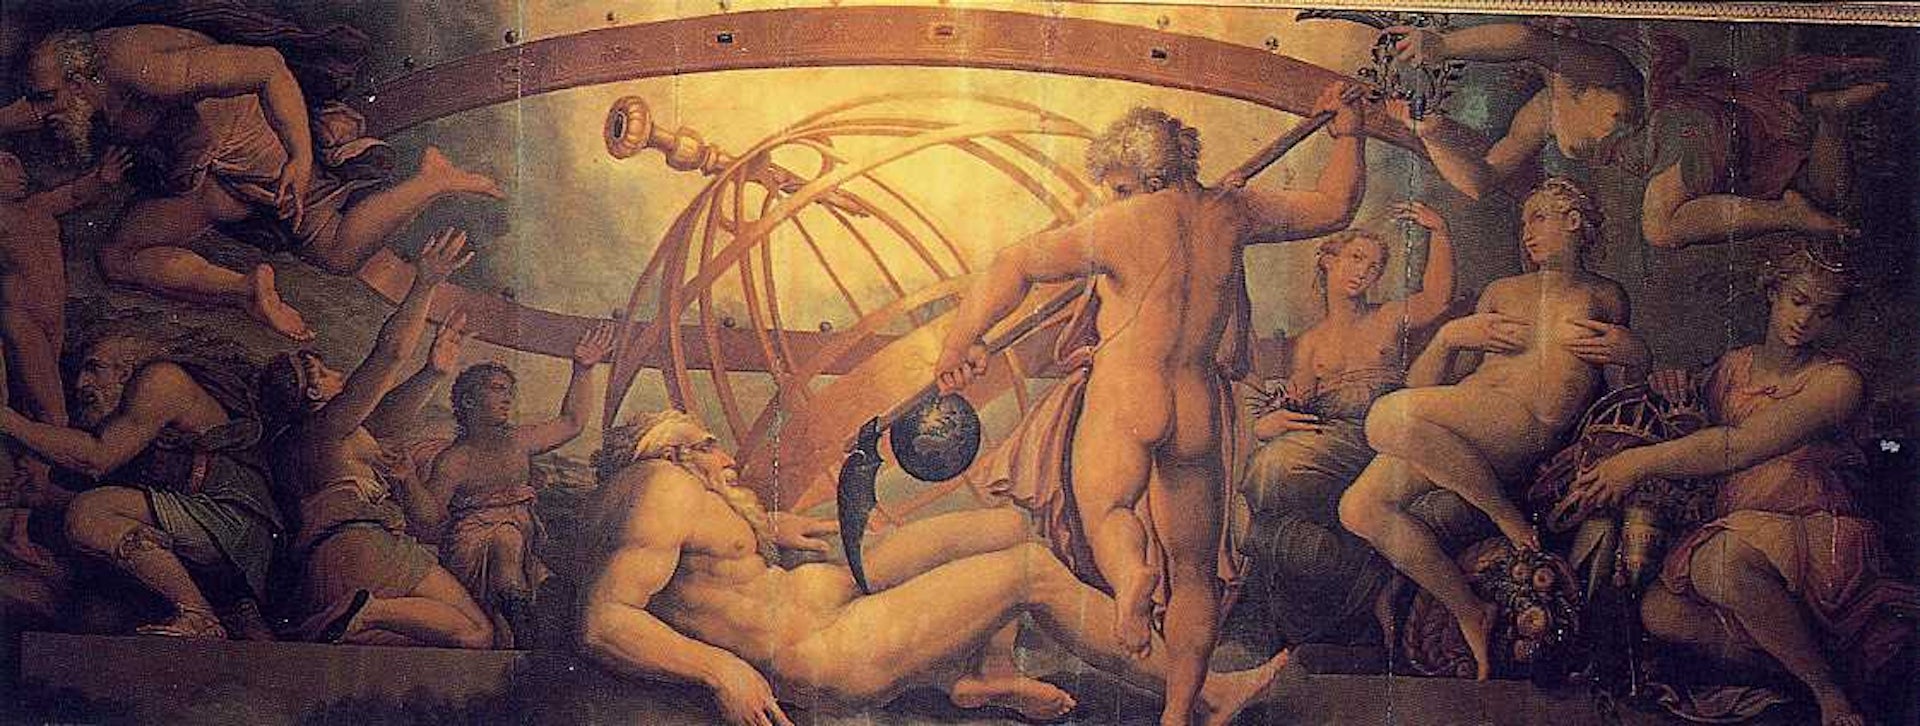 The Mutilation of Uranus by Saturn (Cronus) by Giorgio Vasari